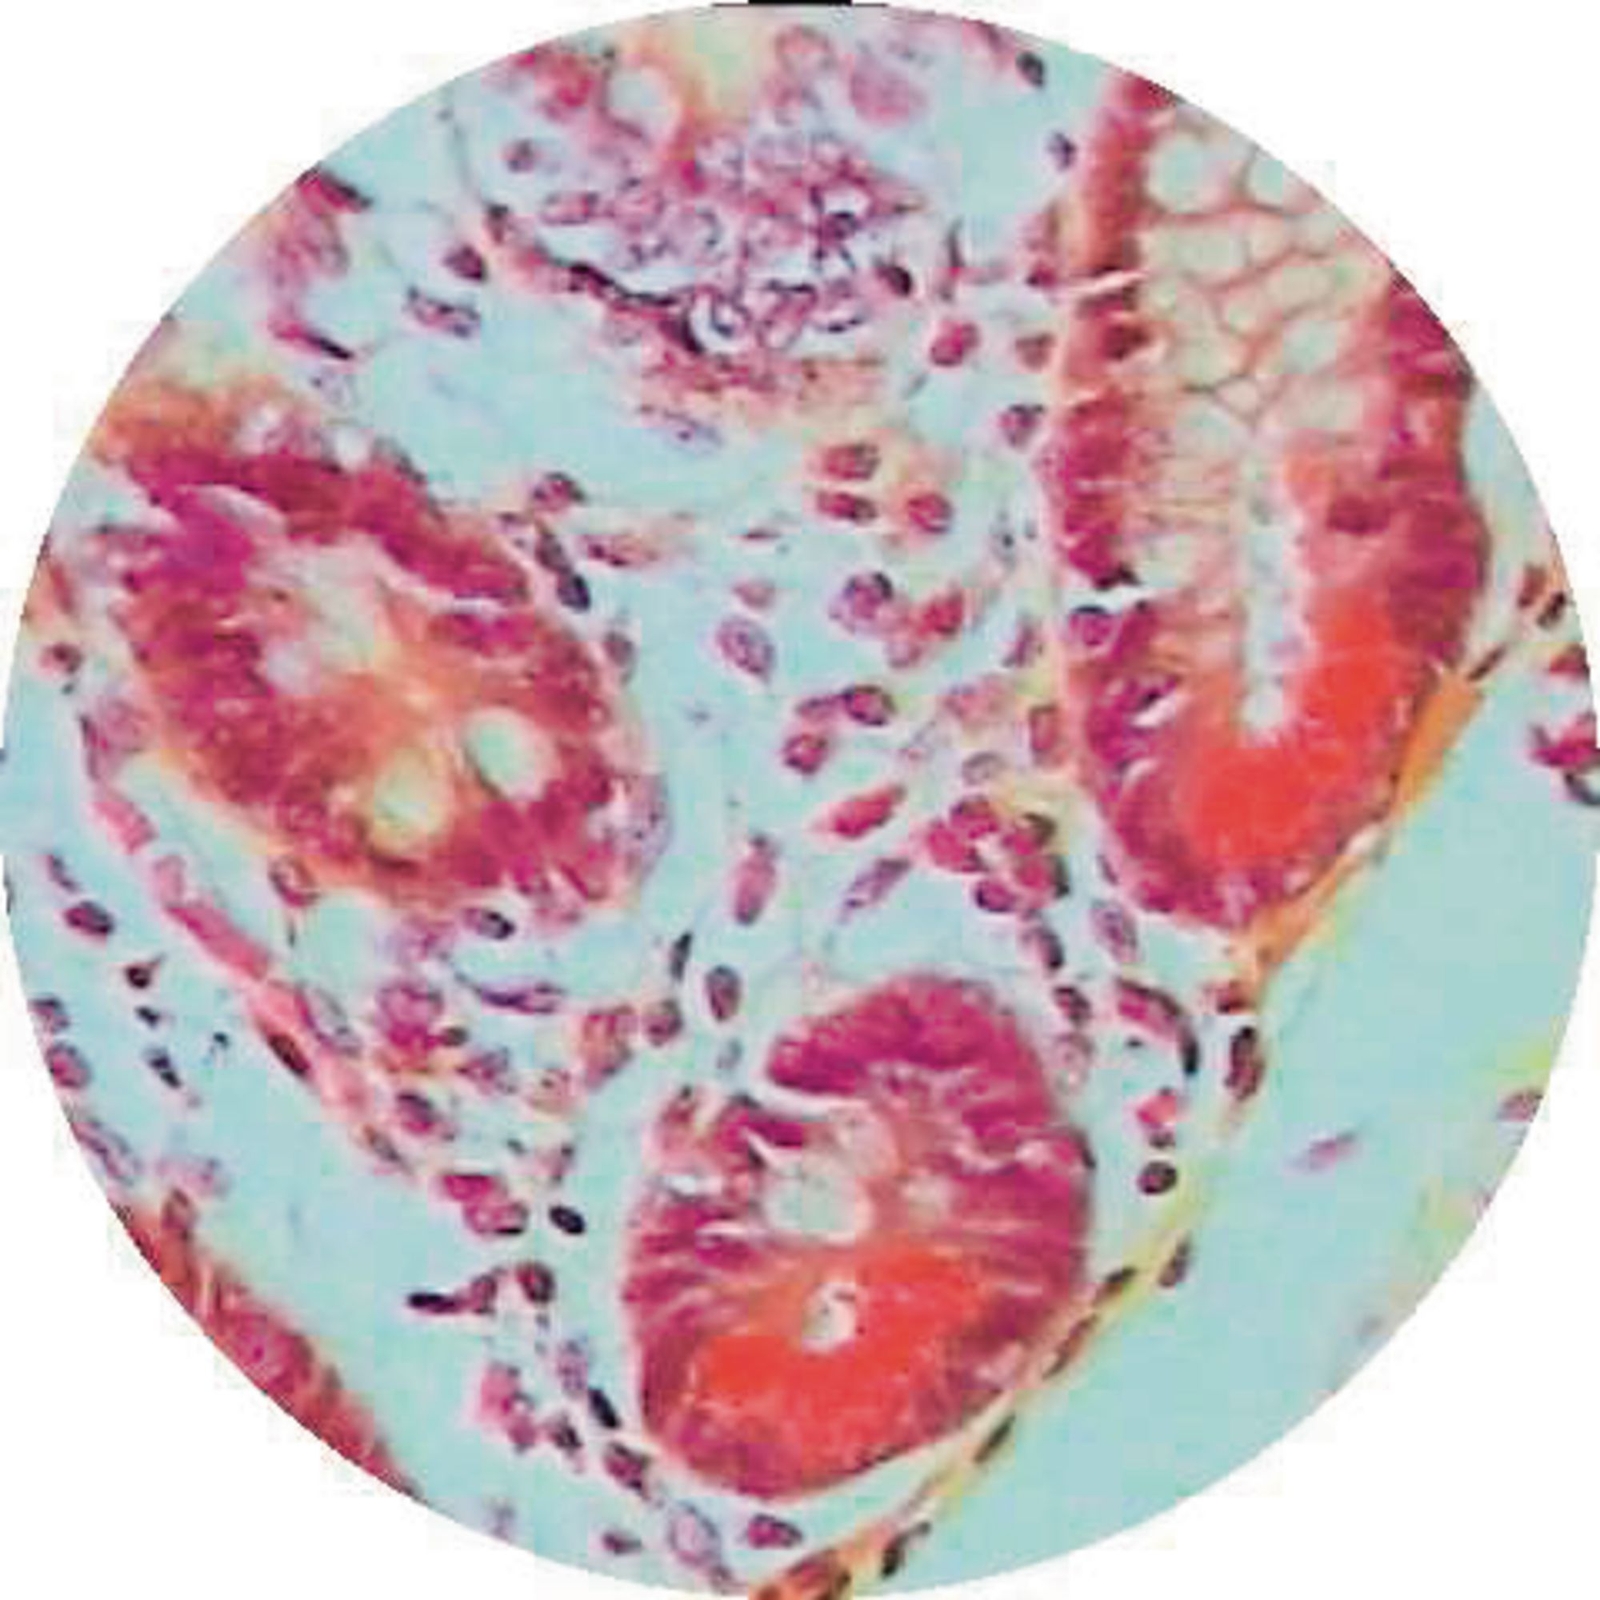 Colon Large Intestine Ts